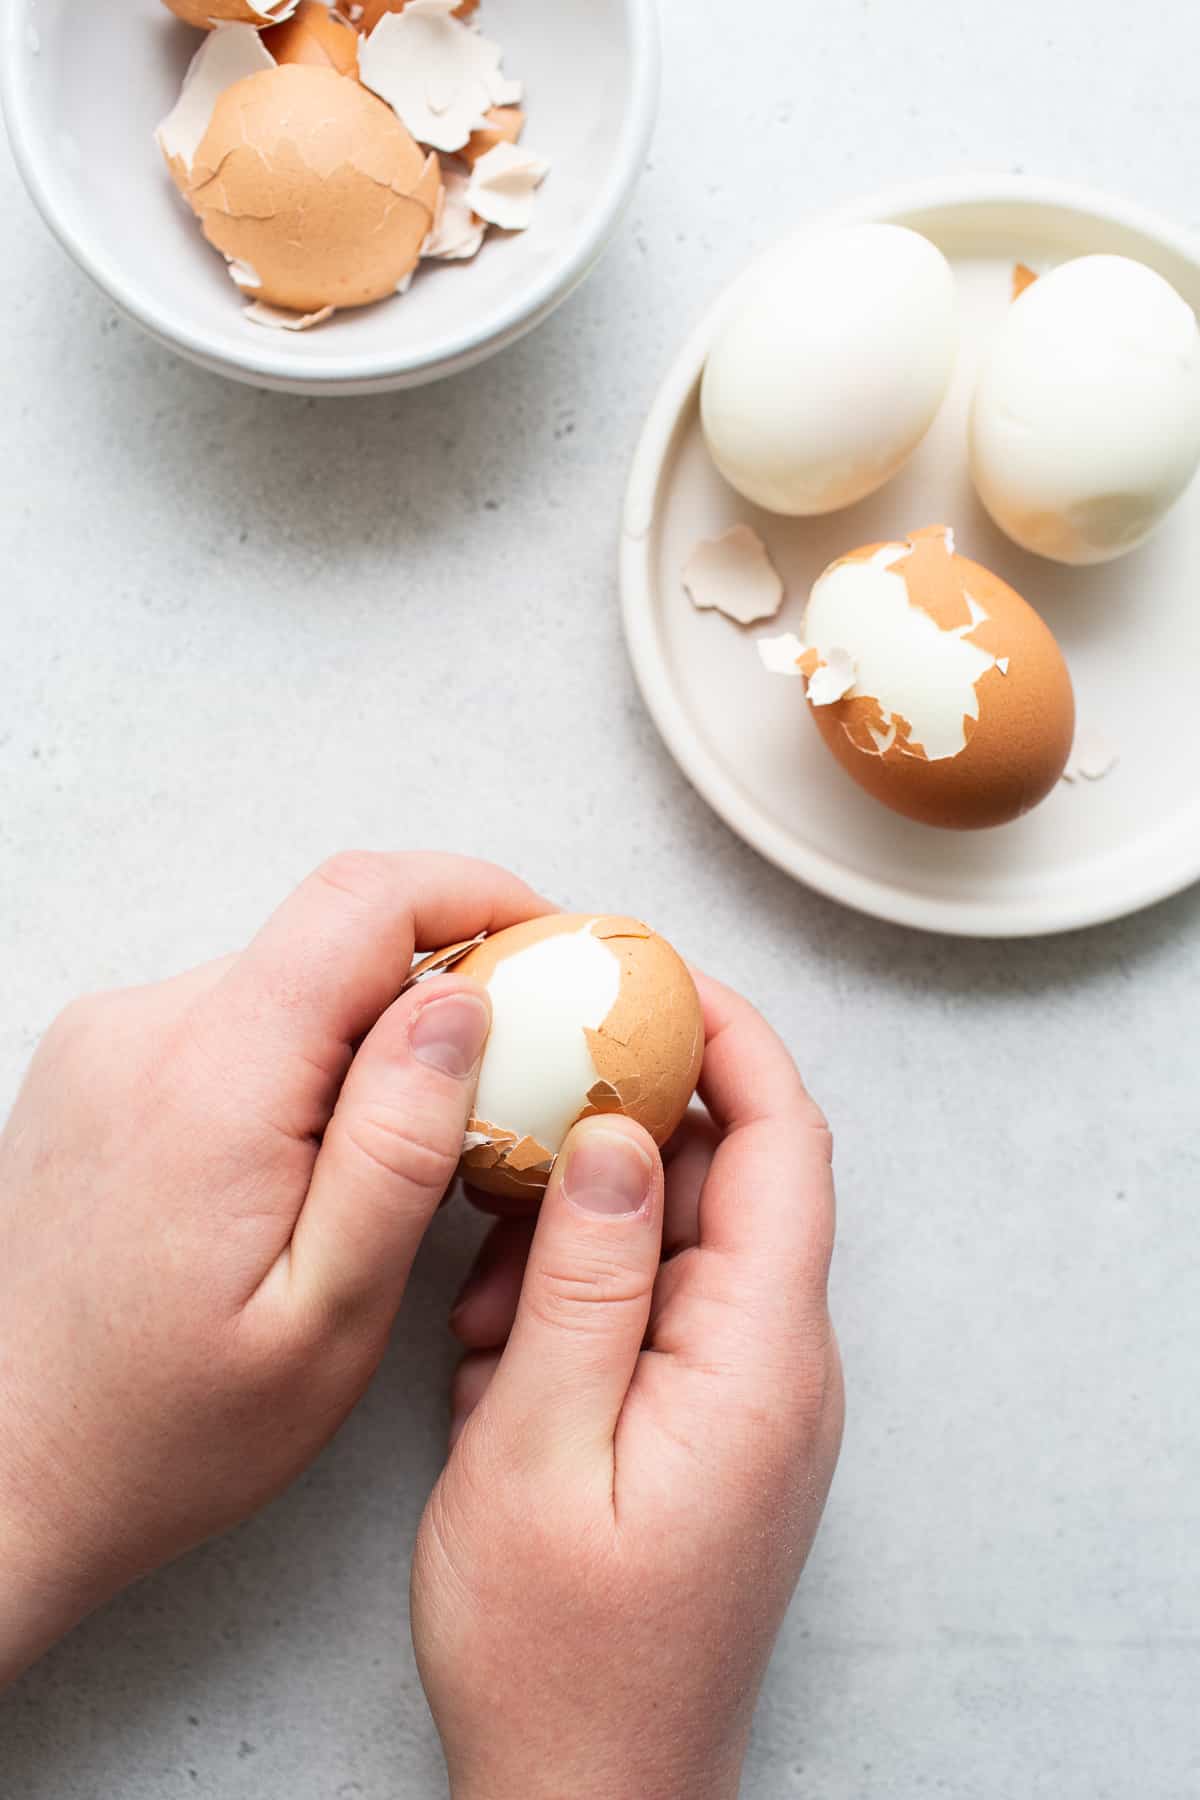 Hands peeling hard boiled eggs.